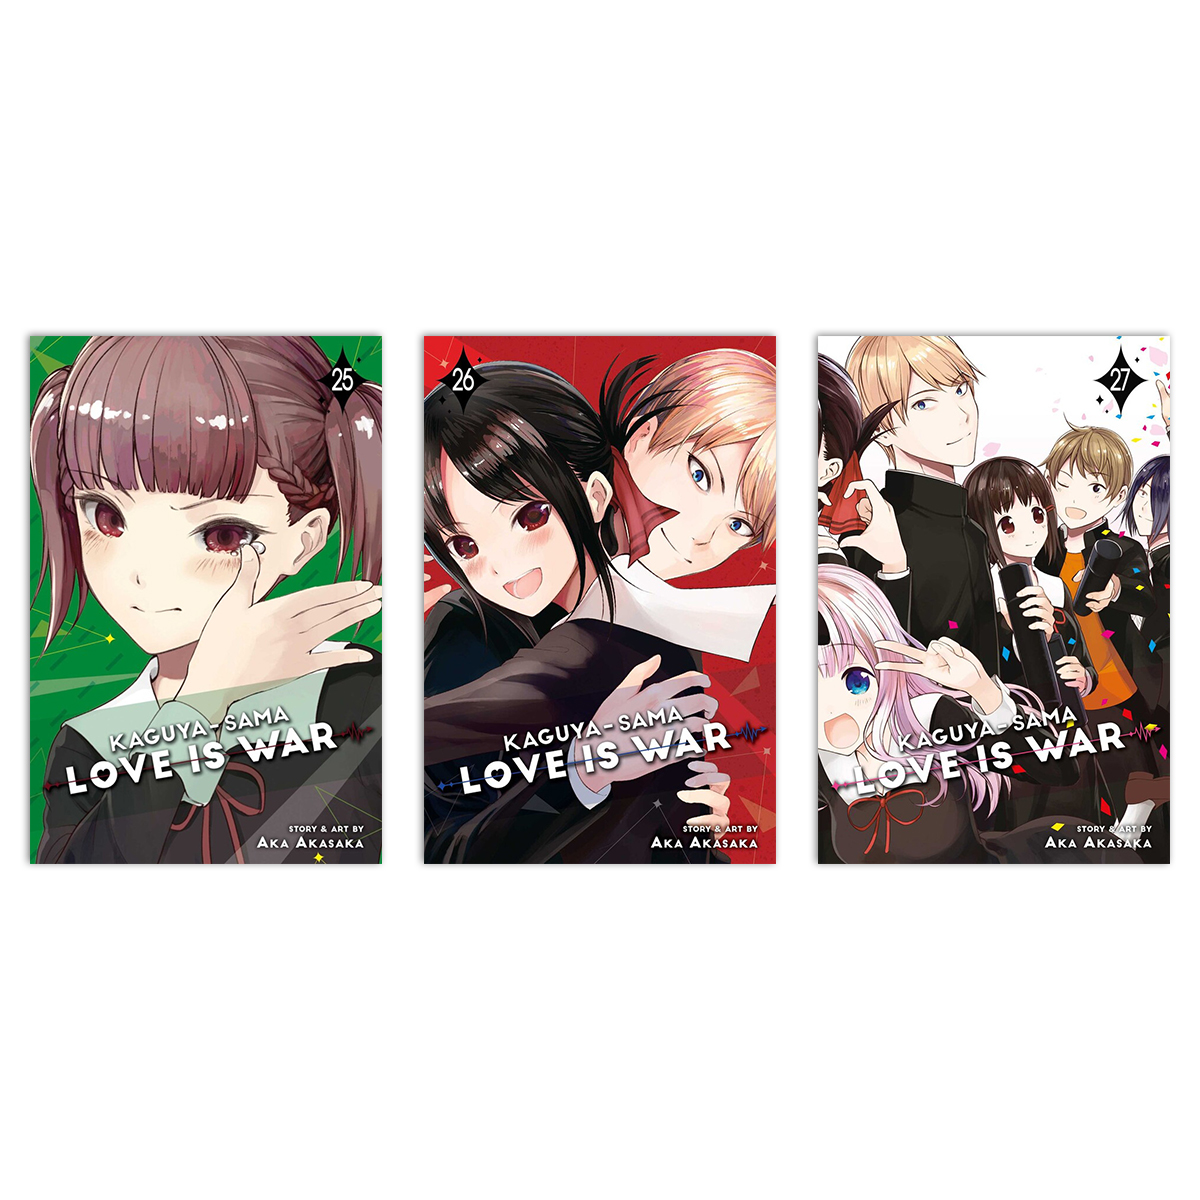 Kaguya-sama: Love Is War Manga Confirmed to End in Next Chapter -  Crunchyroll News